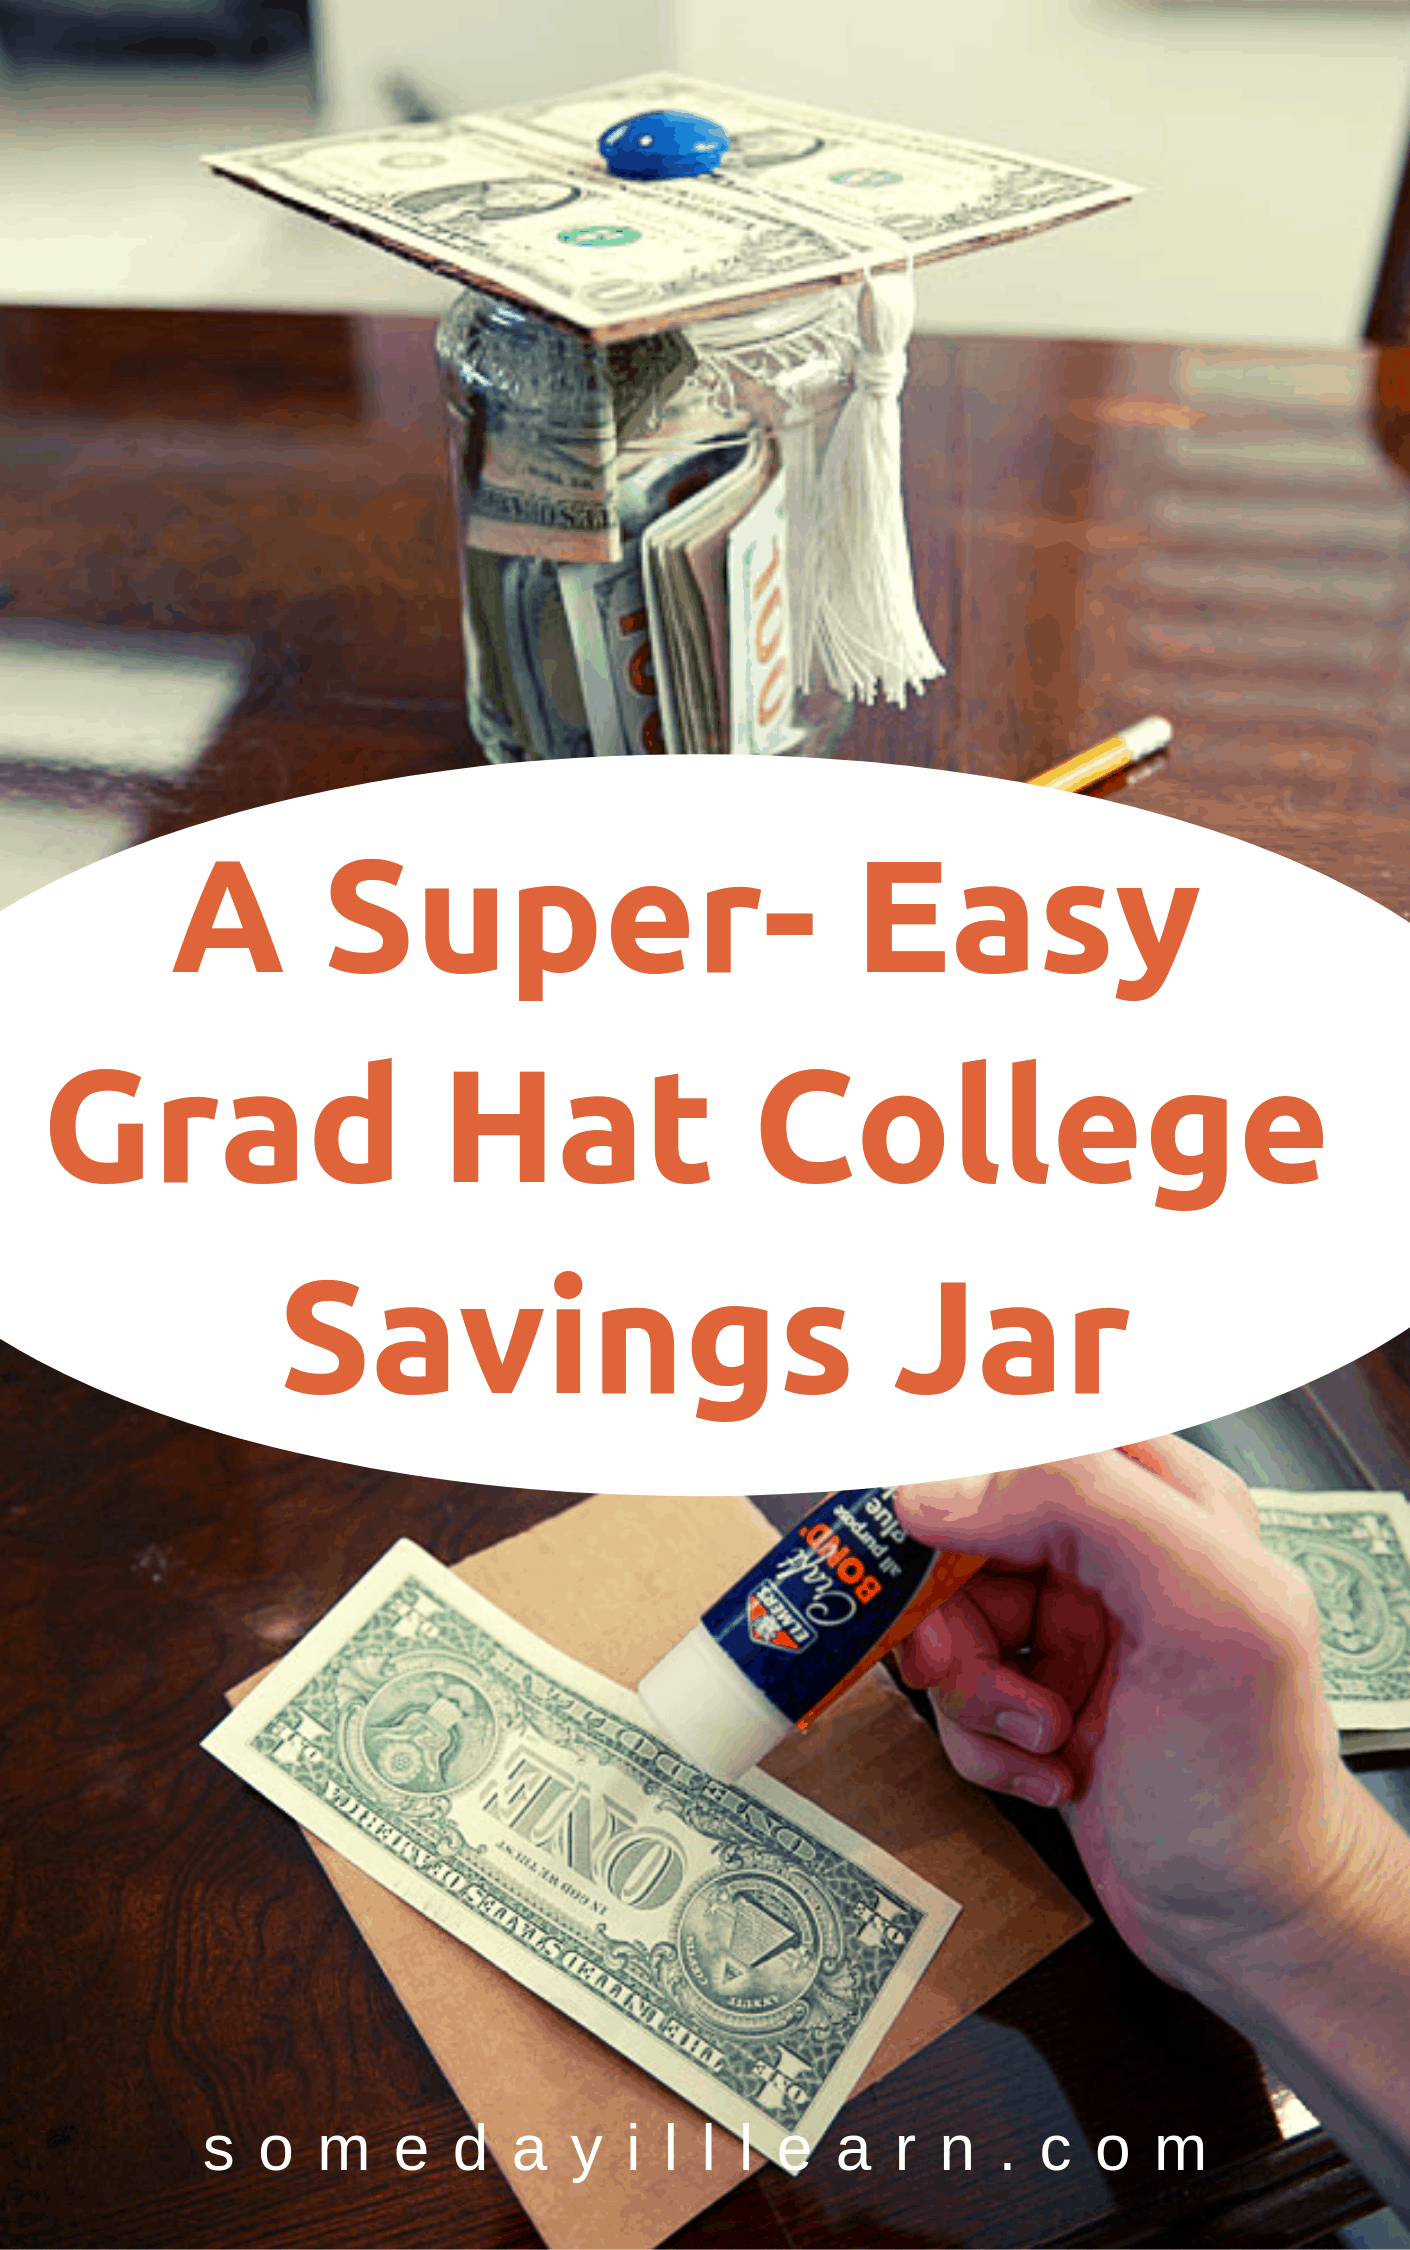 A Super- Easy Grad Hat College Savings Jar